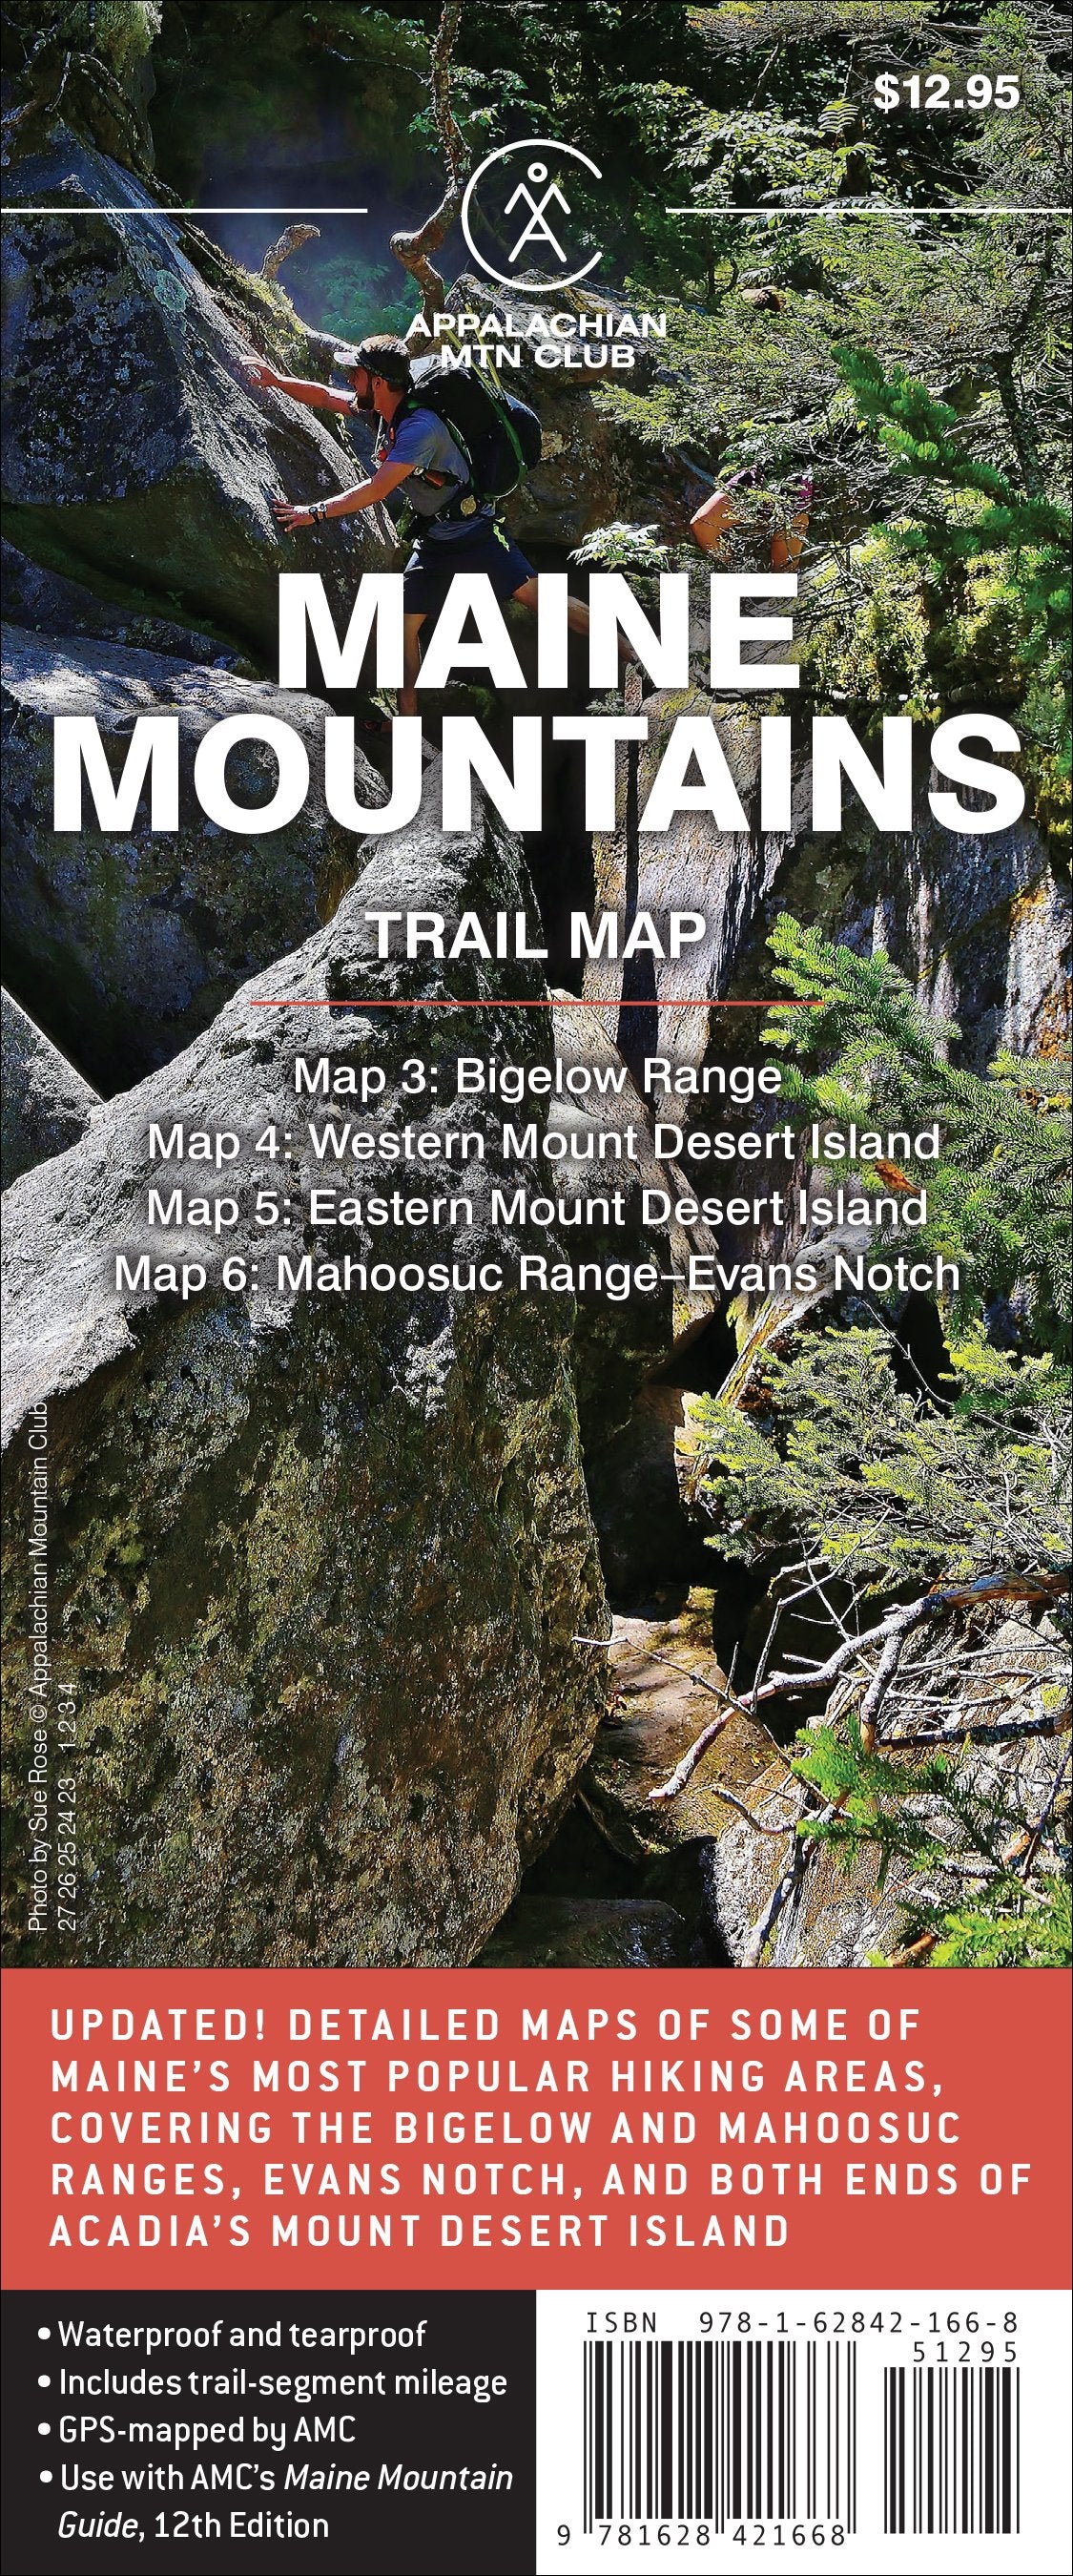 Maine Mountains Trail Map 3-6: Bigelow Range, Western Mount Desert Island, Eastern Mount Desert Island, Mahoosuc Range–Evans Notch